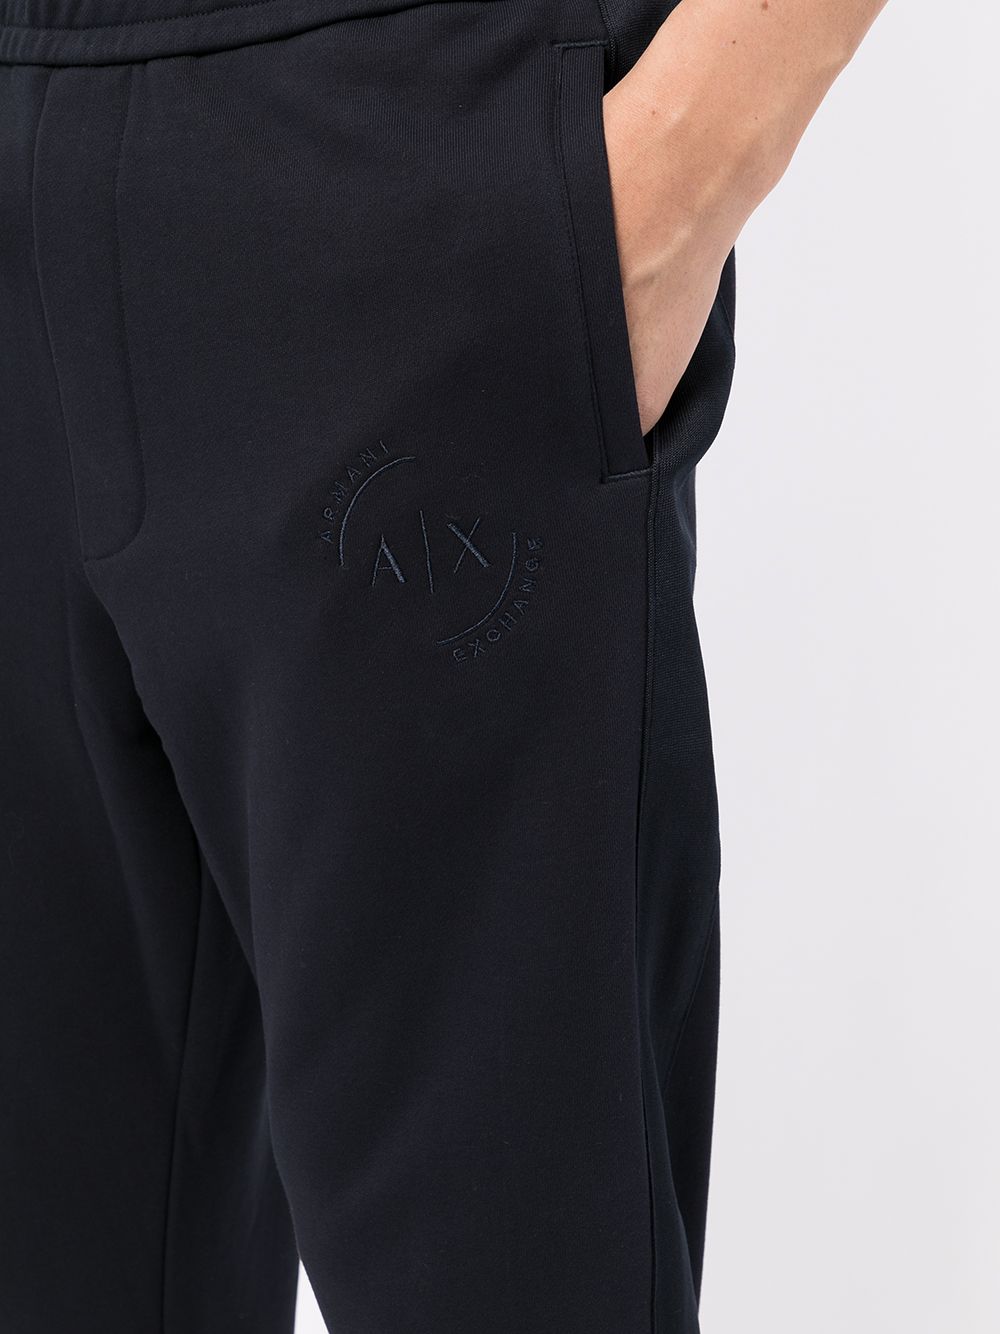 фото Armani exchange спортивные брюки с вышитым логотипом